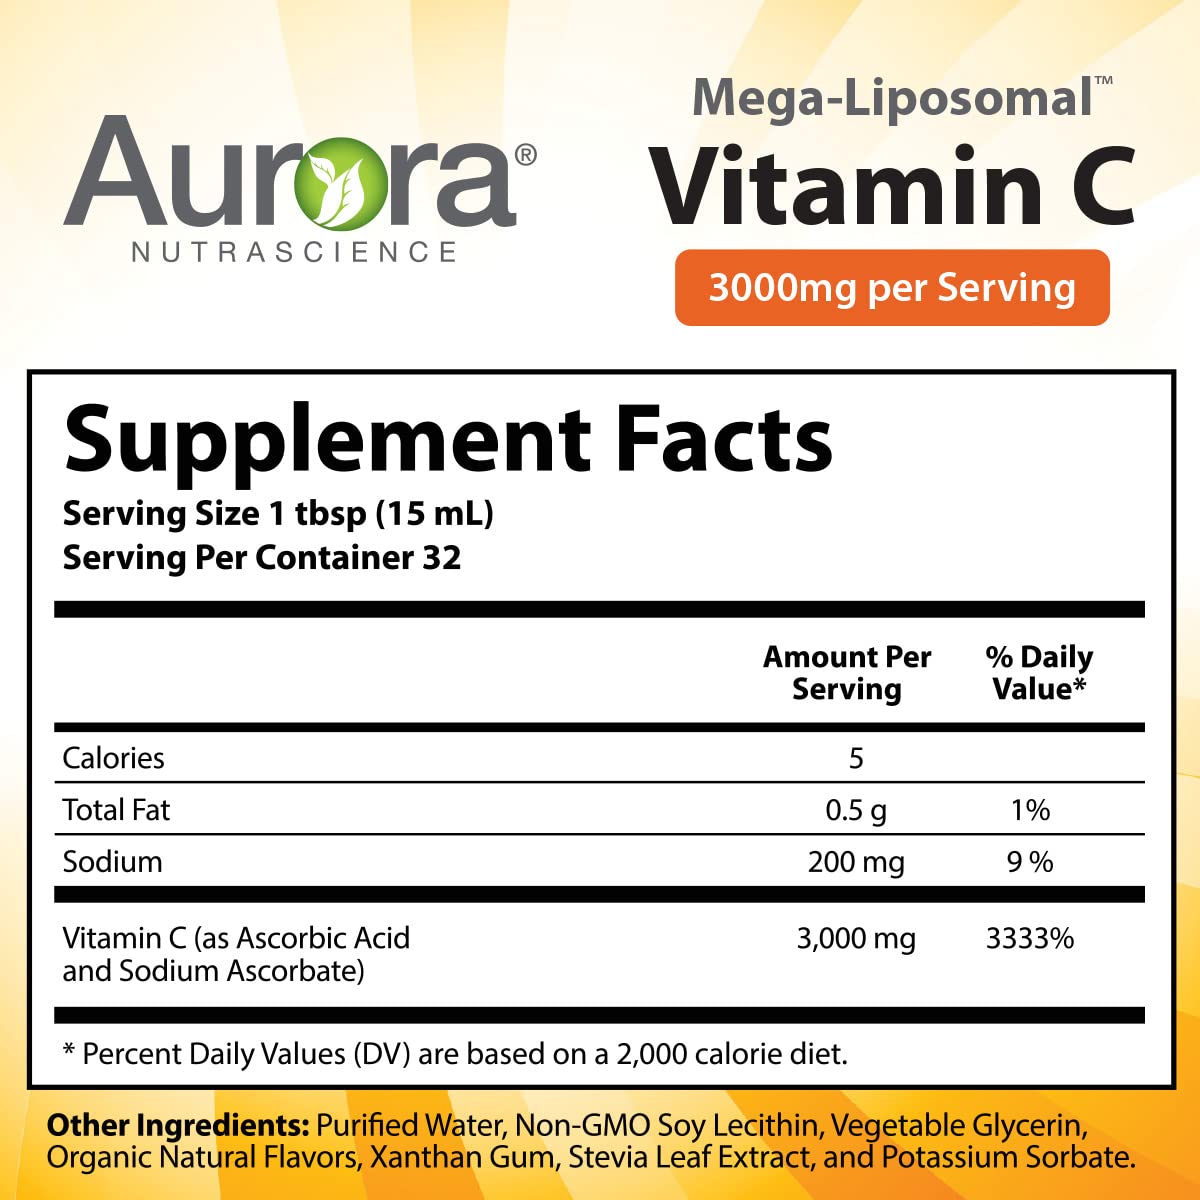 Aurora Nutrascience, Mega- Liposomal Vitamin C, 3,000 mg per Serving, Gluten Free, Non-GMO, Sugar Free, High Absorption, Fat Soluble Vitamin C, Immune System Support, 16 oz (480 mL)